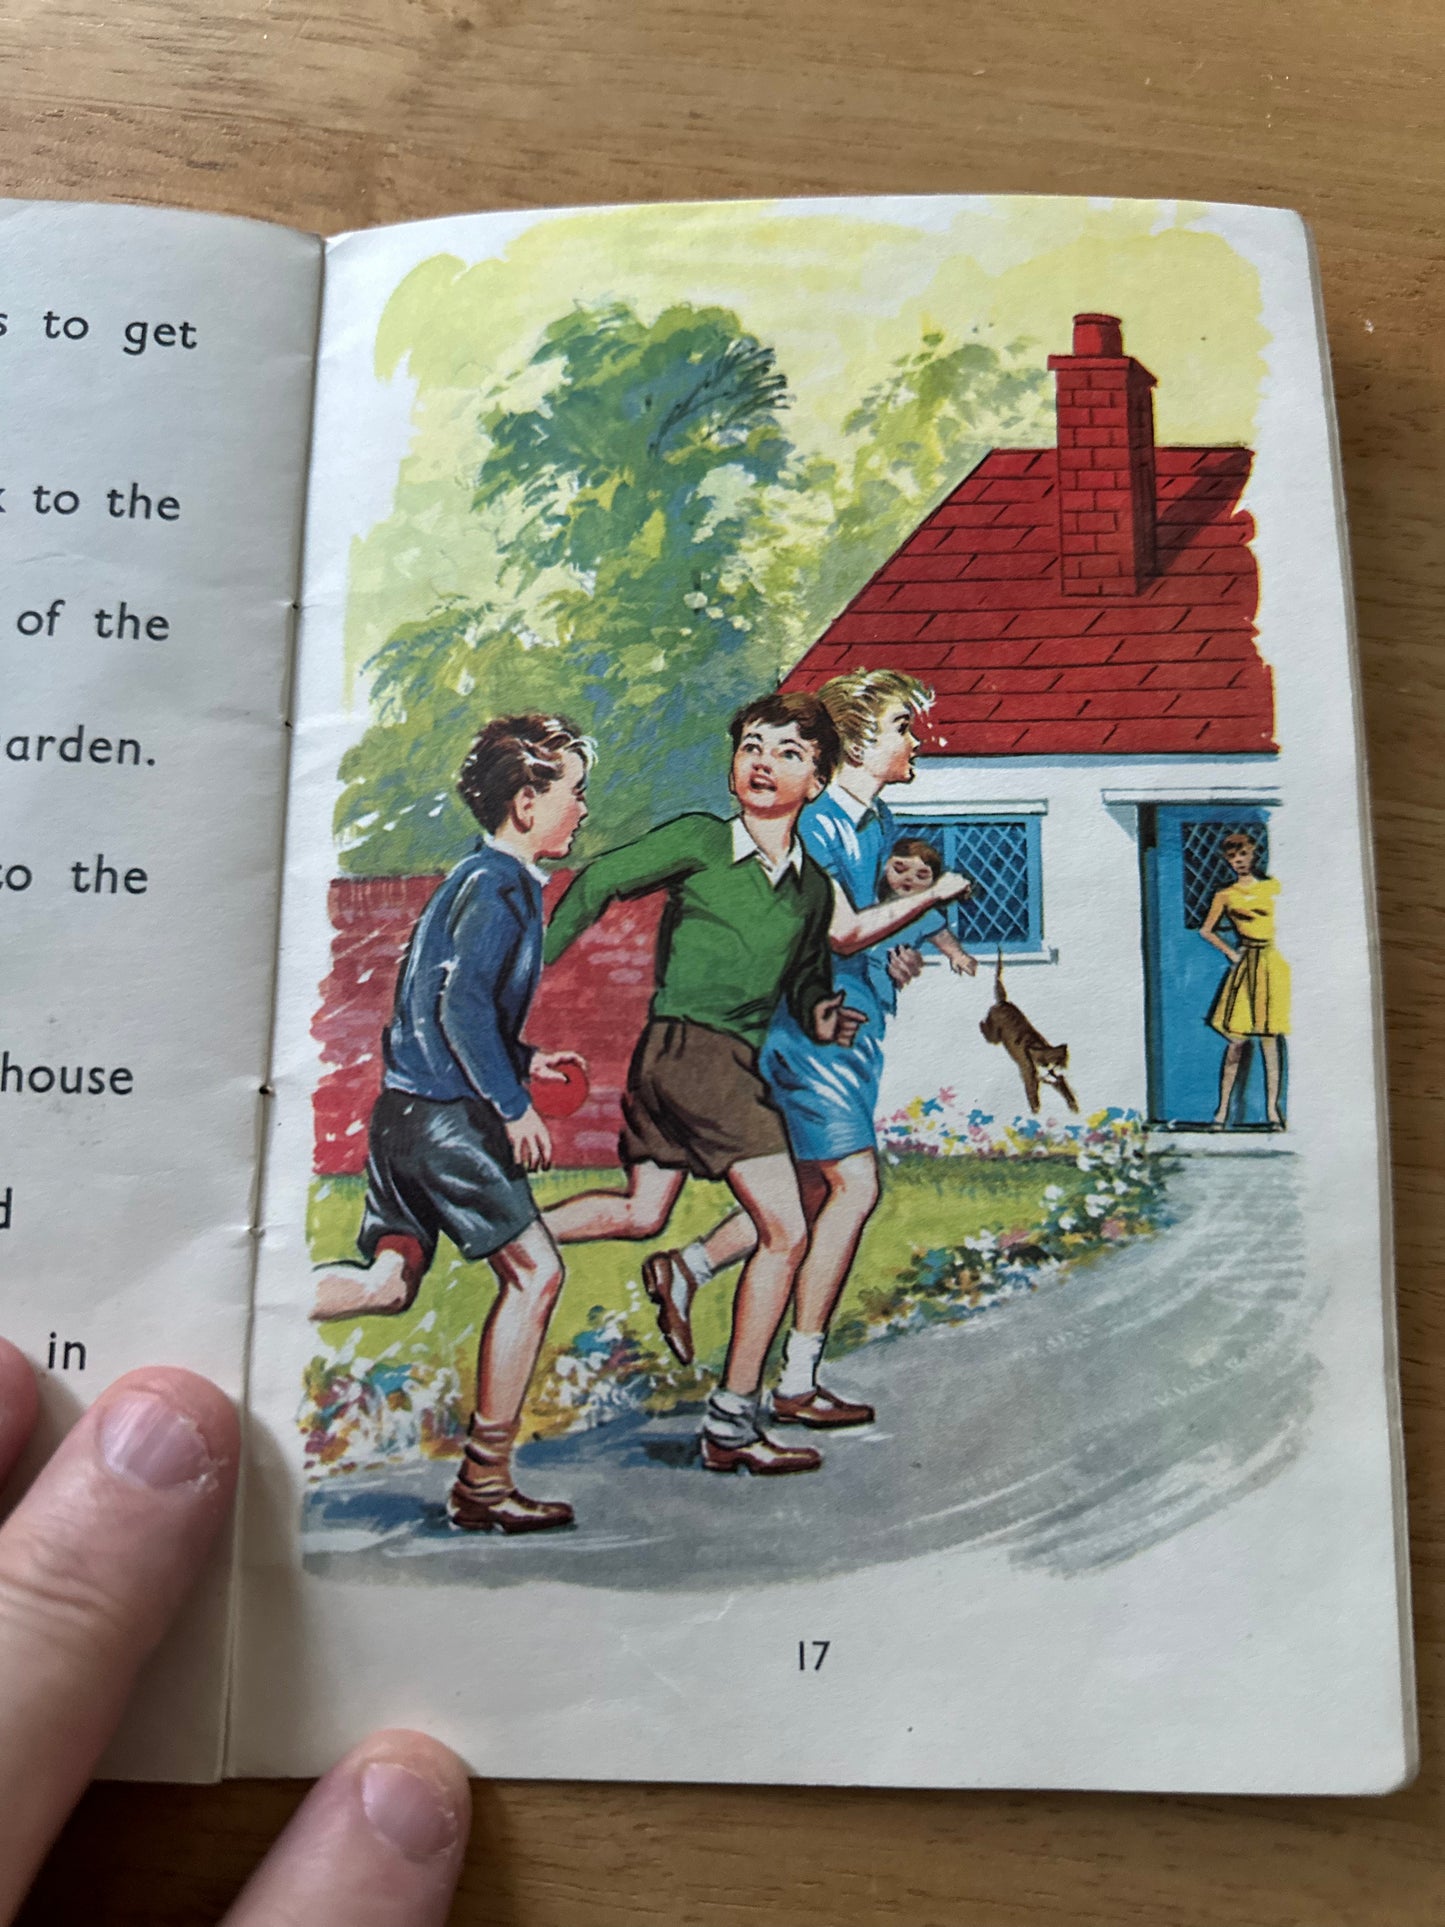 1962*1st* Raving To Read bk7 On The Park - A. E. Tansley & R. H. Nicholls(F. Pash illustration) E. J. Arnold & Son Ltd